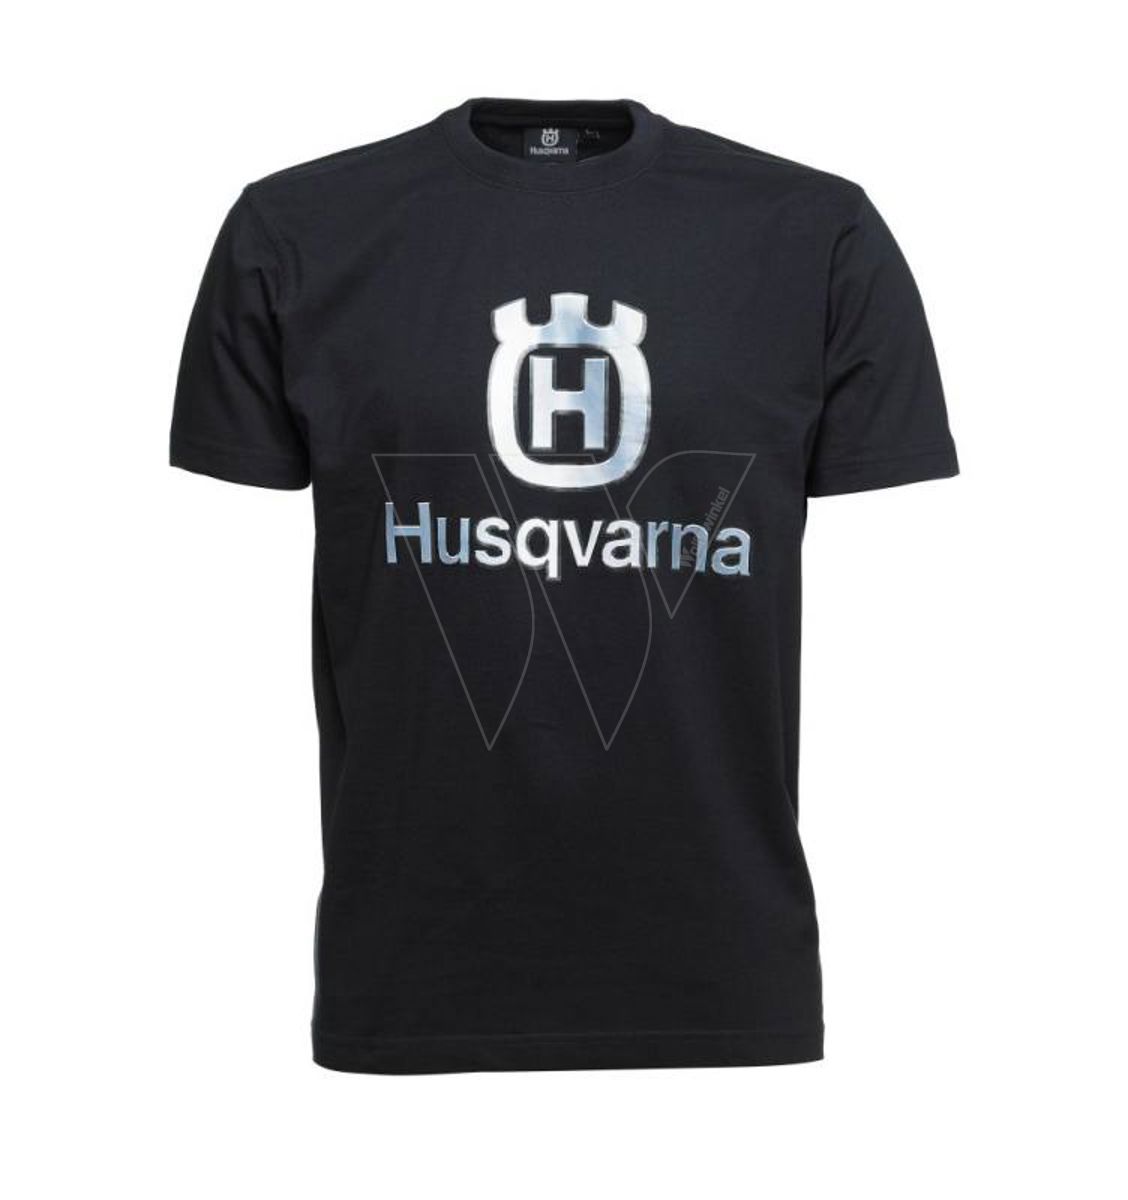 Husqvarna t-shirt mit großem logo - s